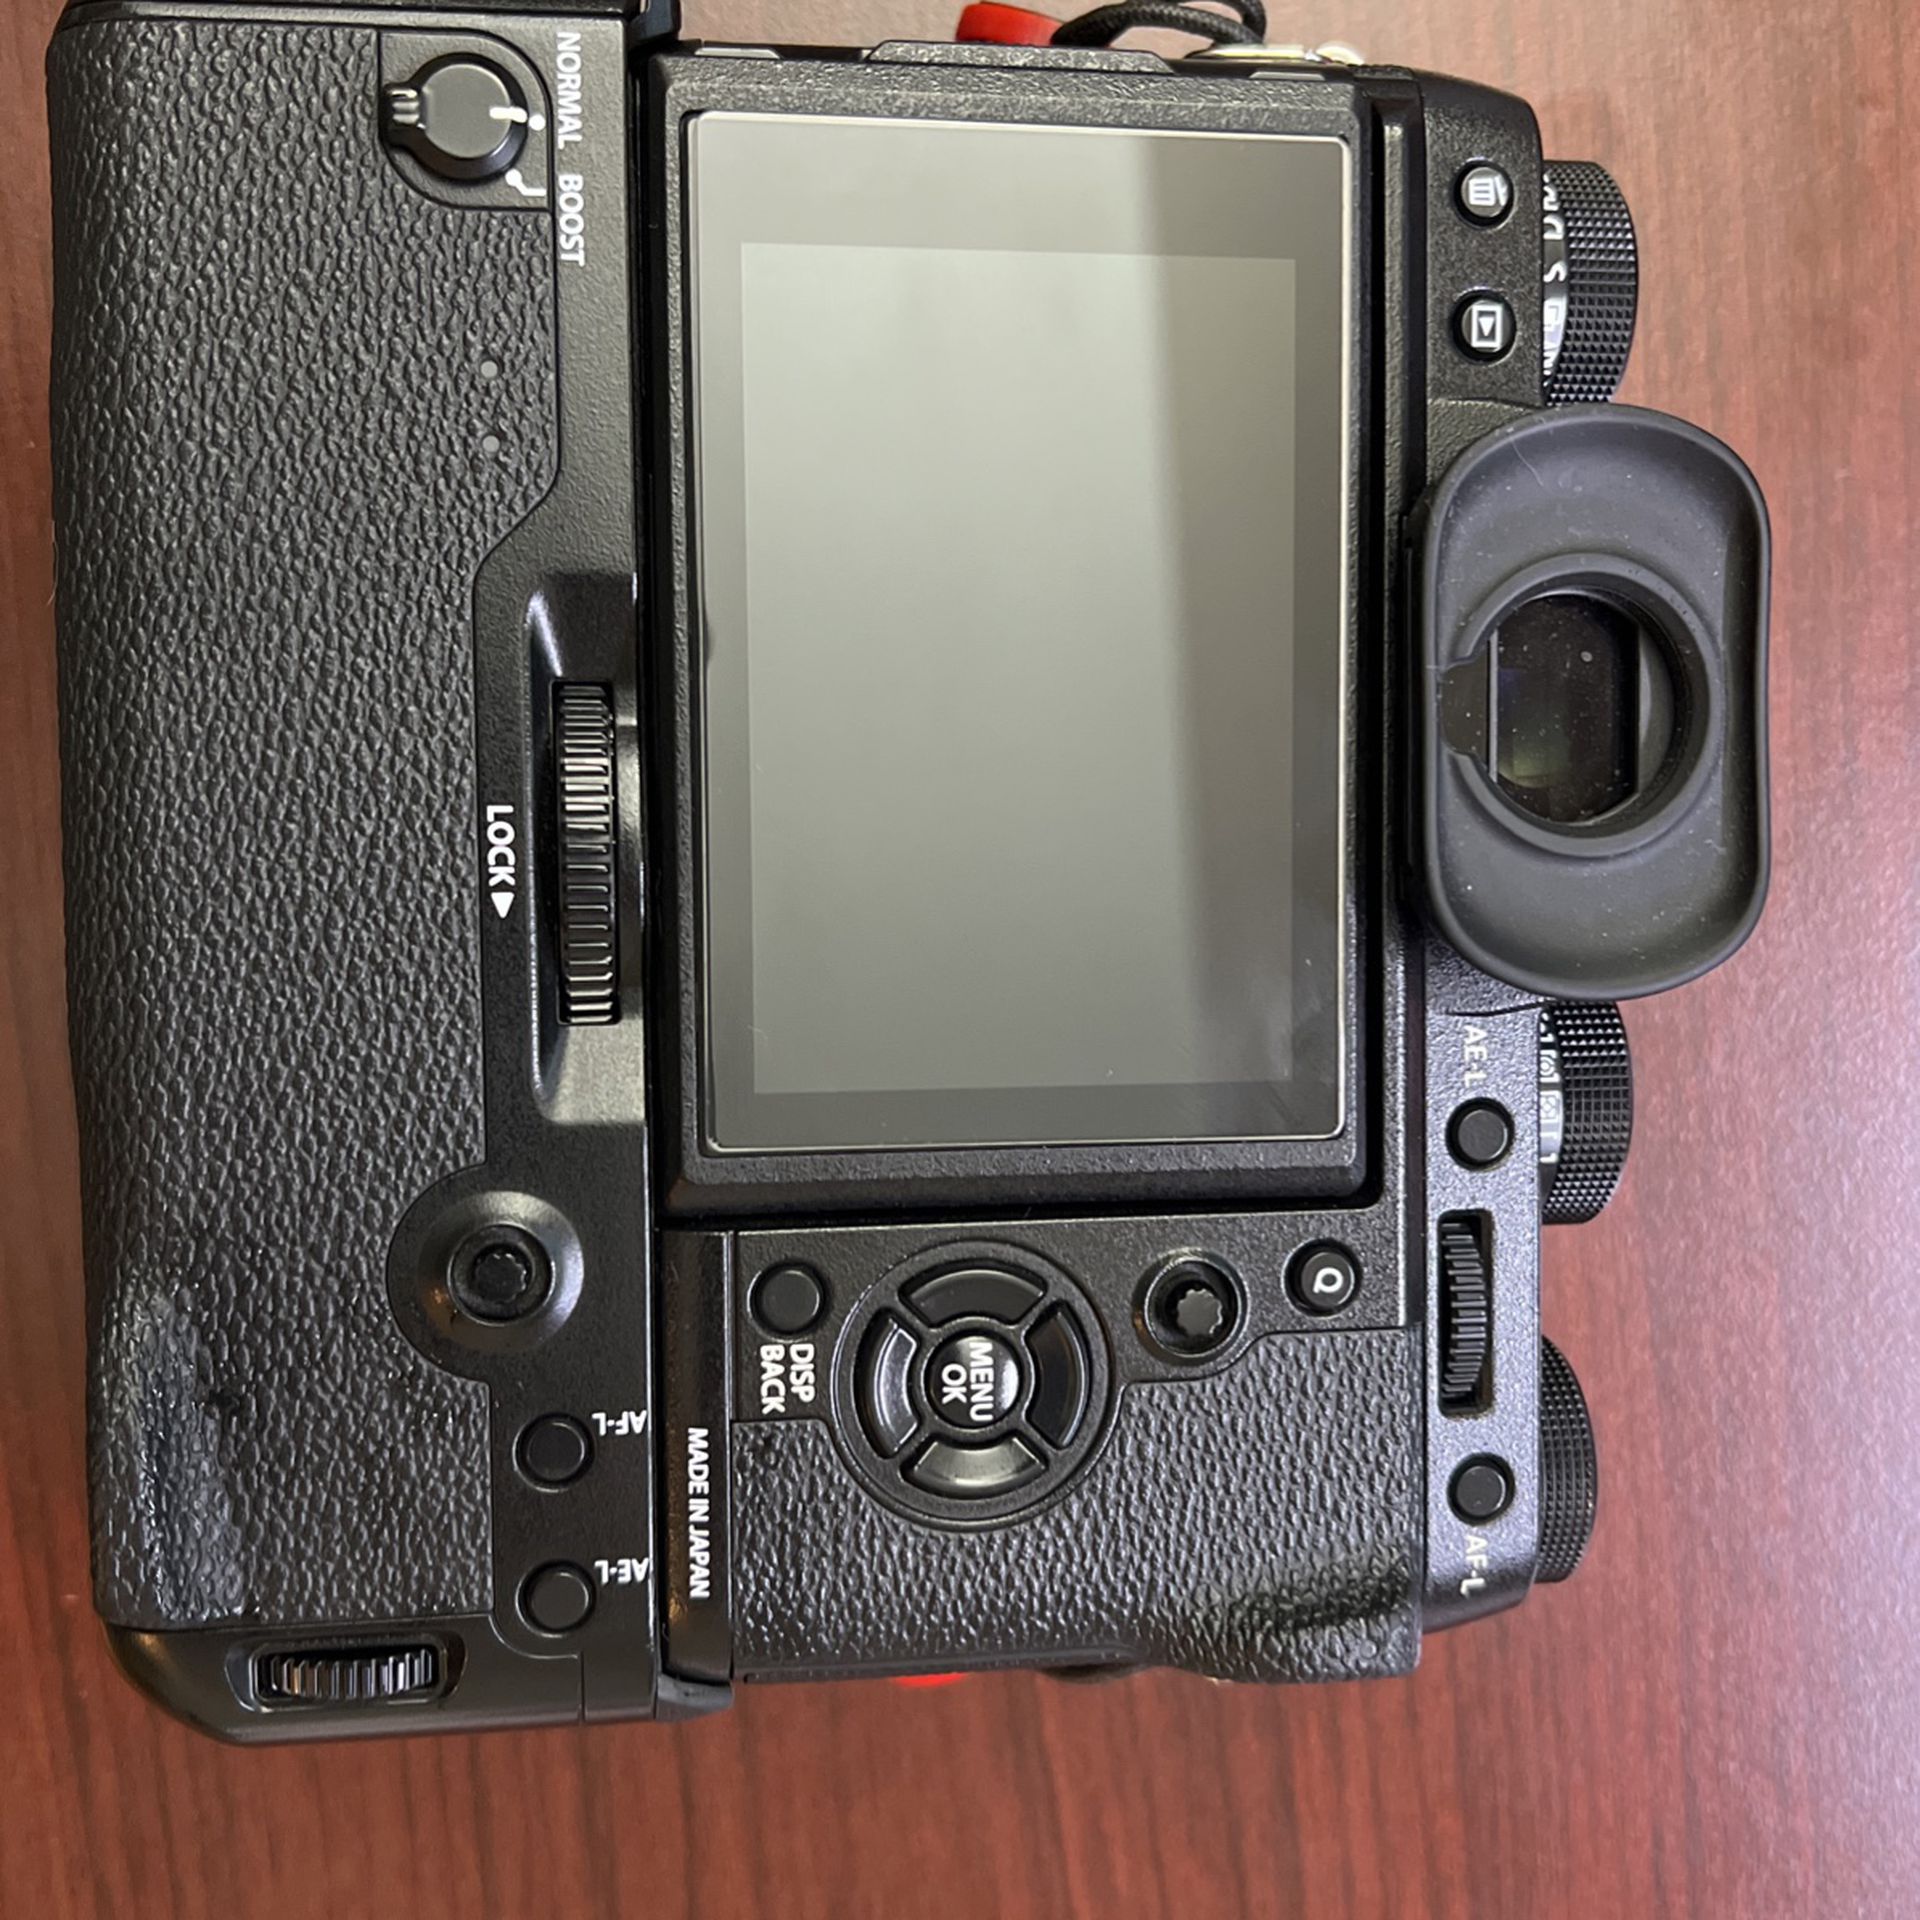 Fujifilm X-T2 Mirrorless Camera with Batteries Grip